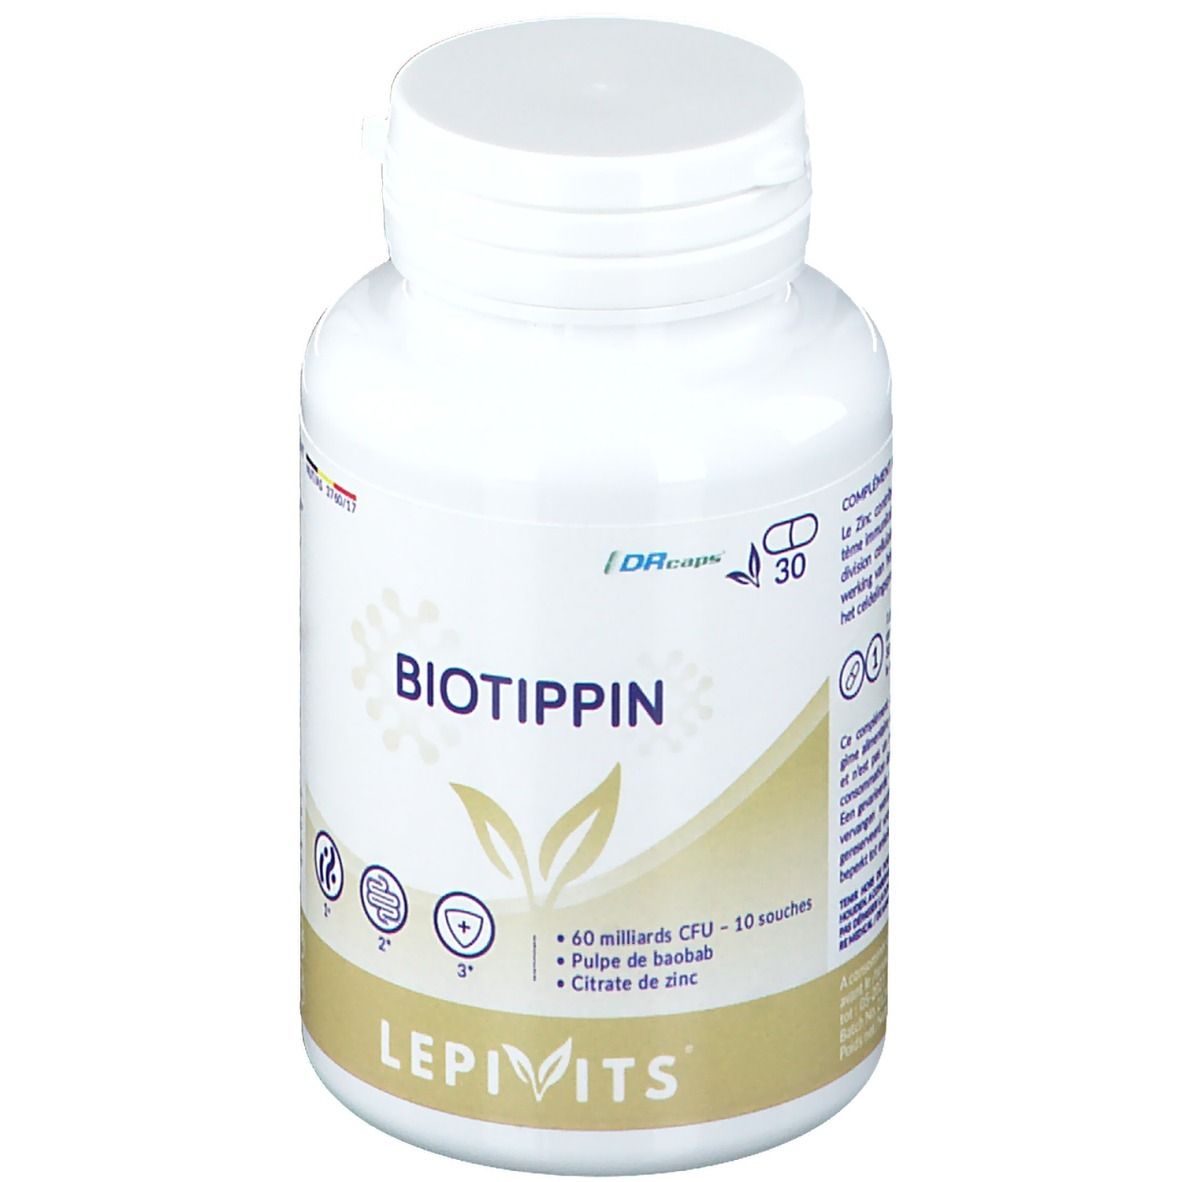 Lepivits® Biotippin